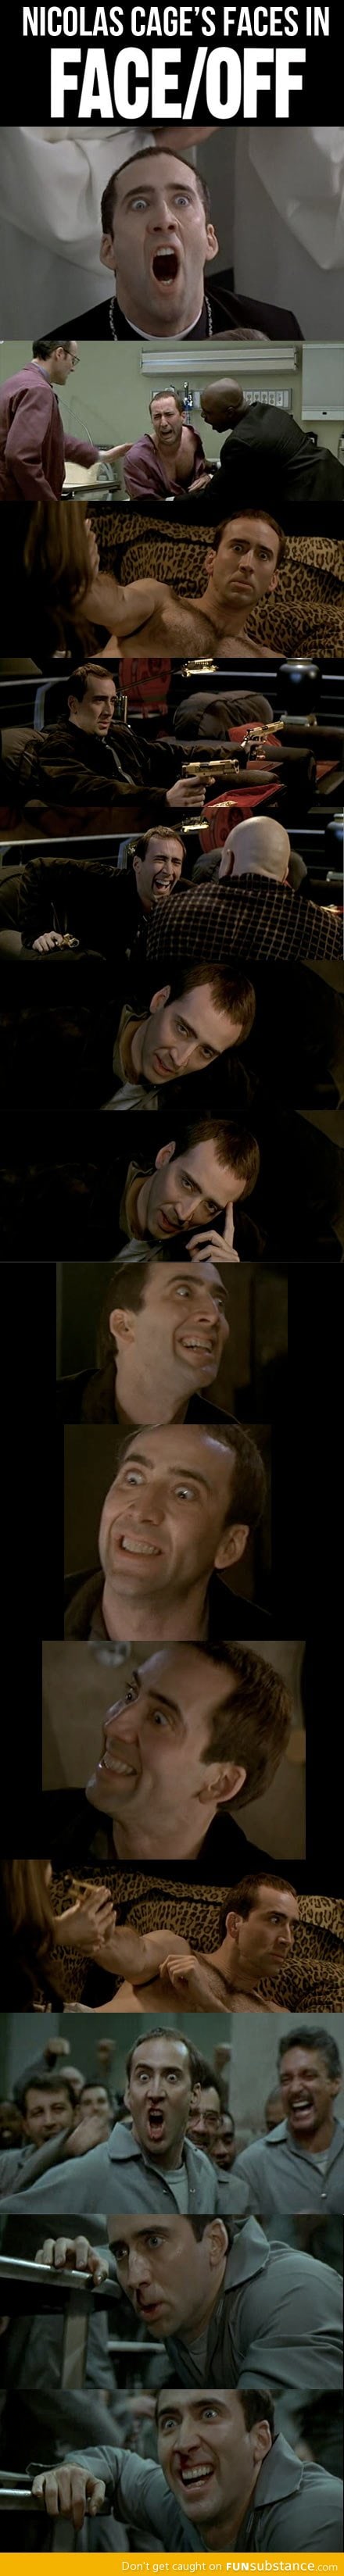 Nicolas Cage's faces are priceless